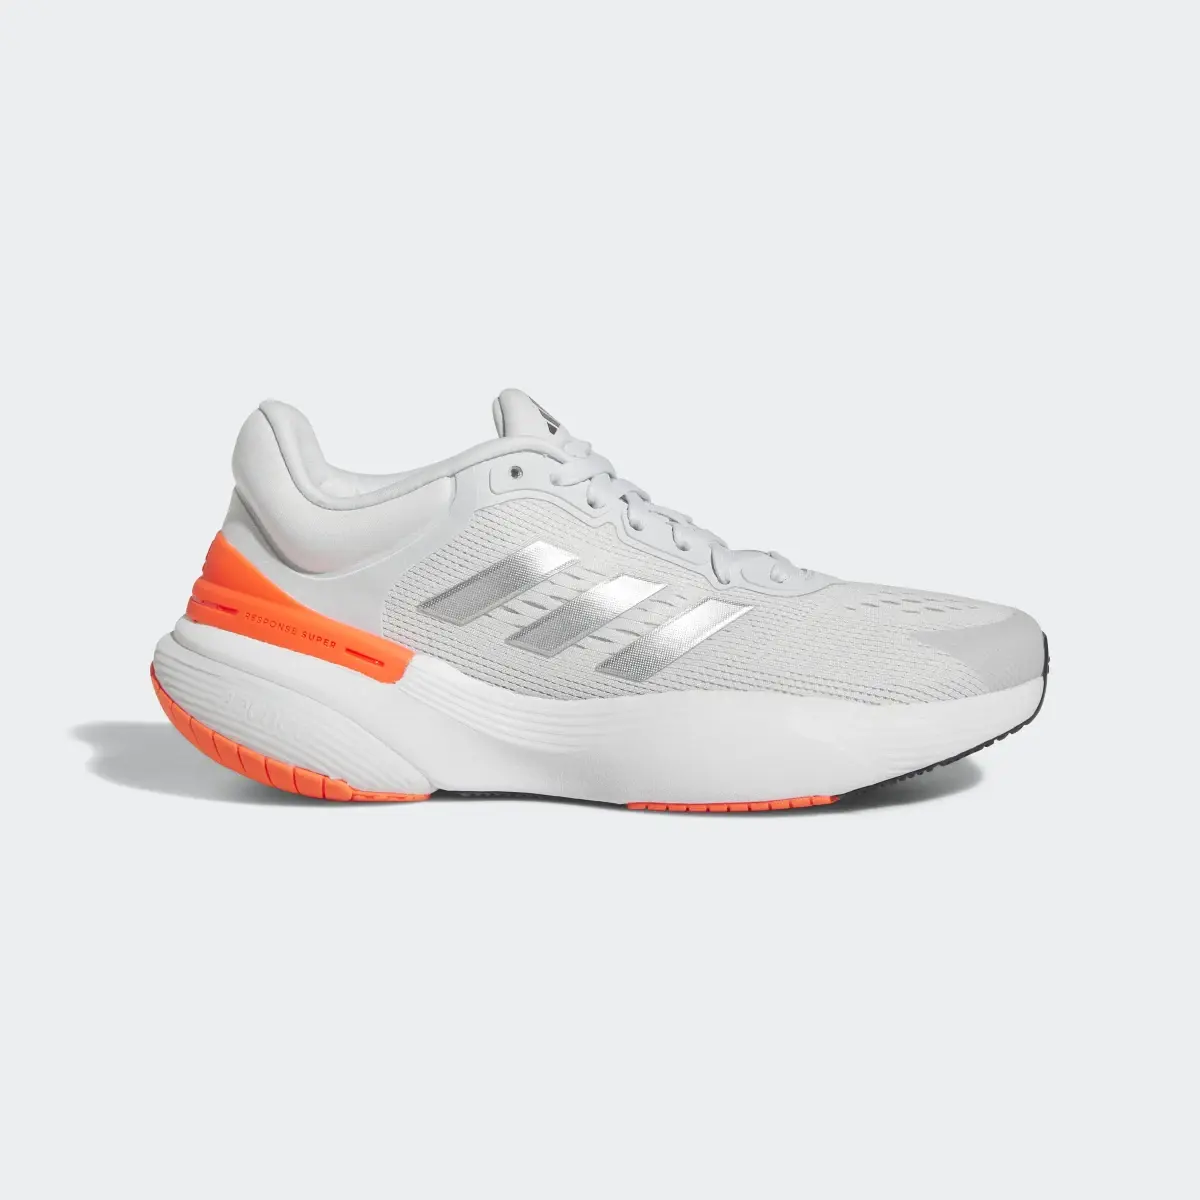 Adidas Response Super 3.0 Running Shoes. 2